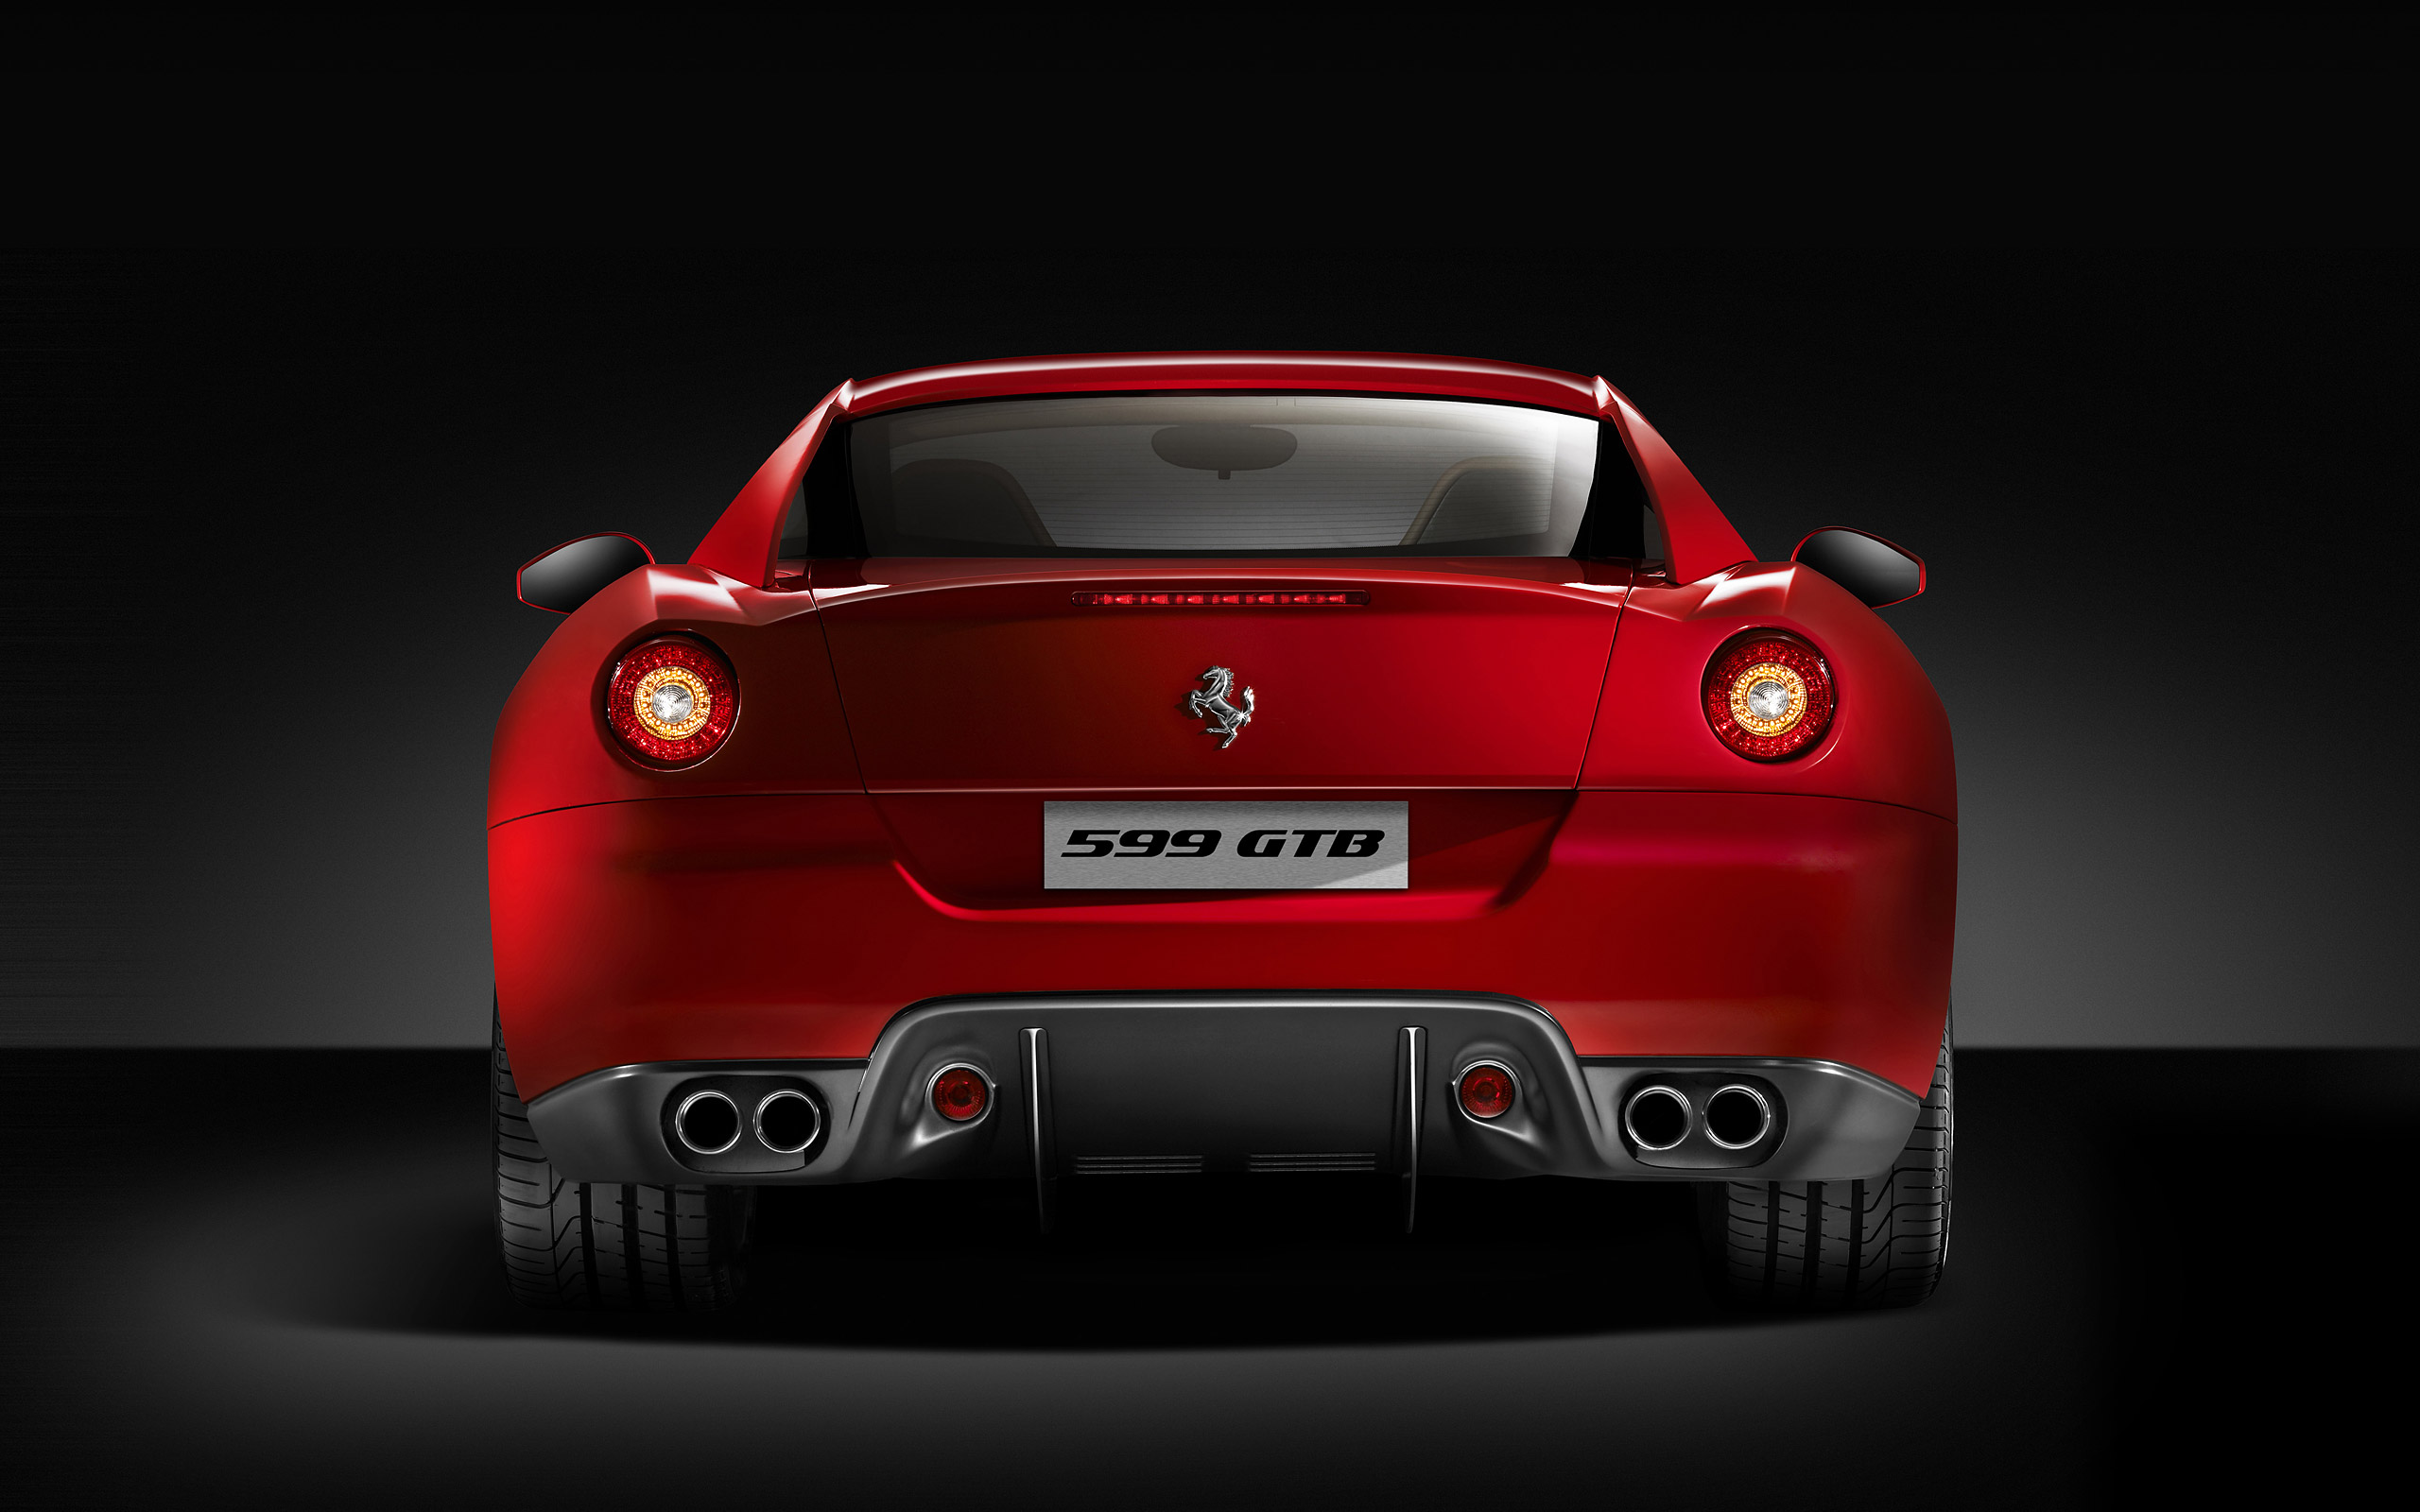  2006 Ferrari 599 GTB Wallpaper.